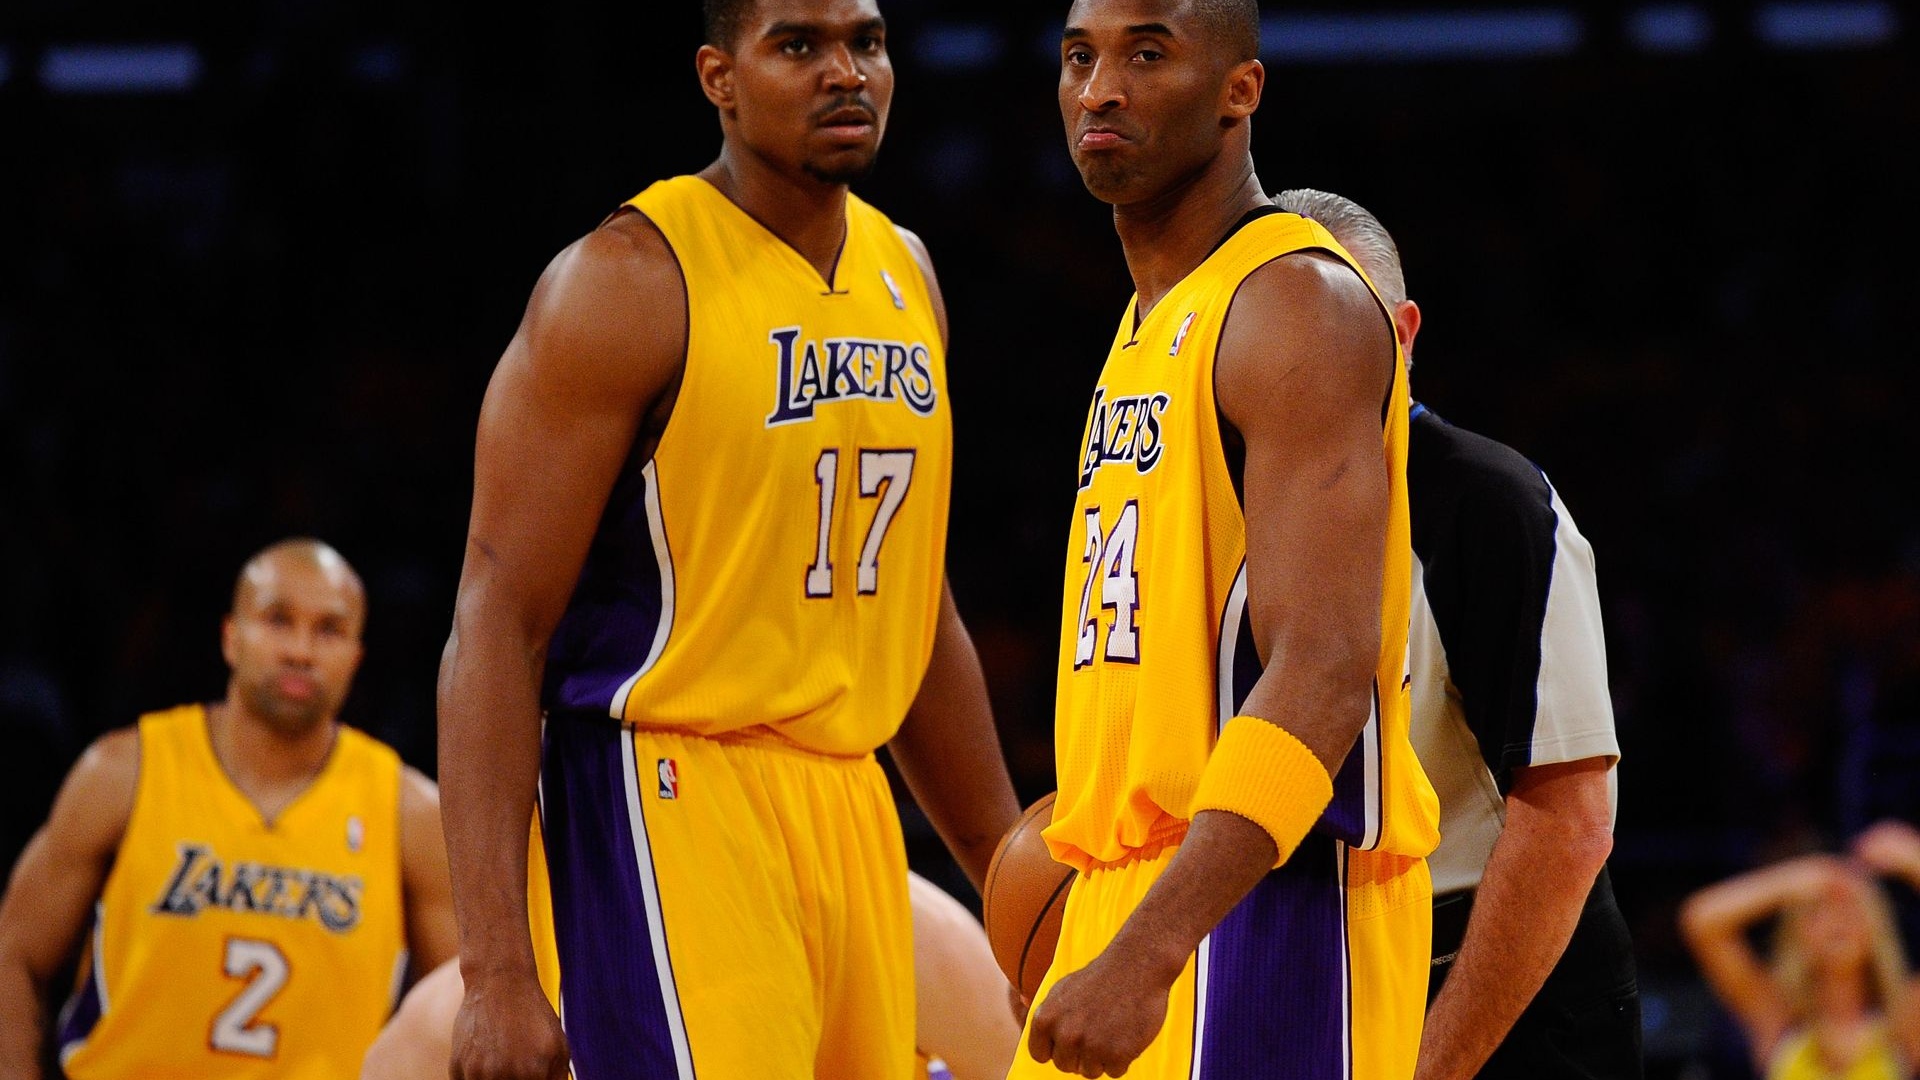 Andrew Bynum Kobe Bryant Los Angeles Lakers